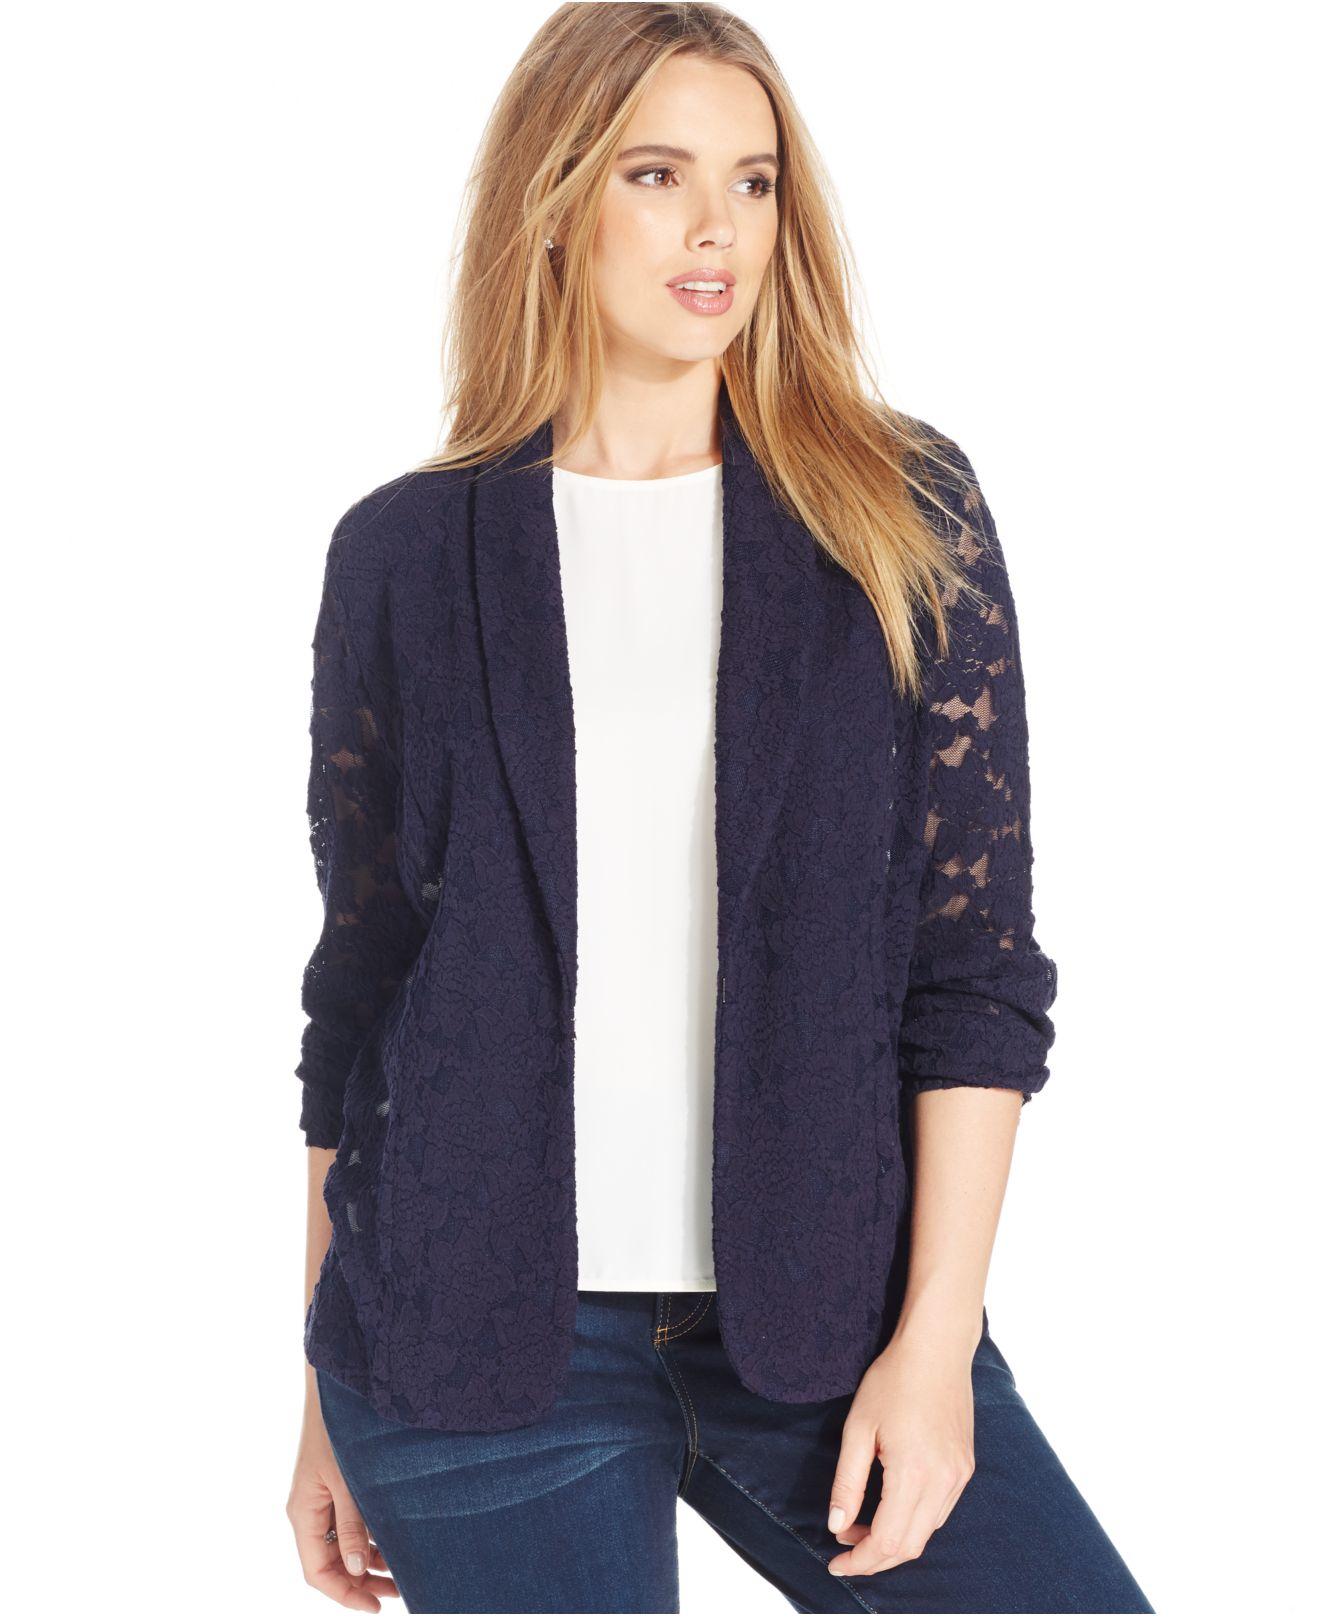 Lyst - Inc International Concepts Plus Size Floral-lace Jacket in Blue